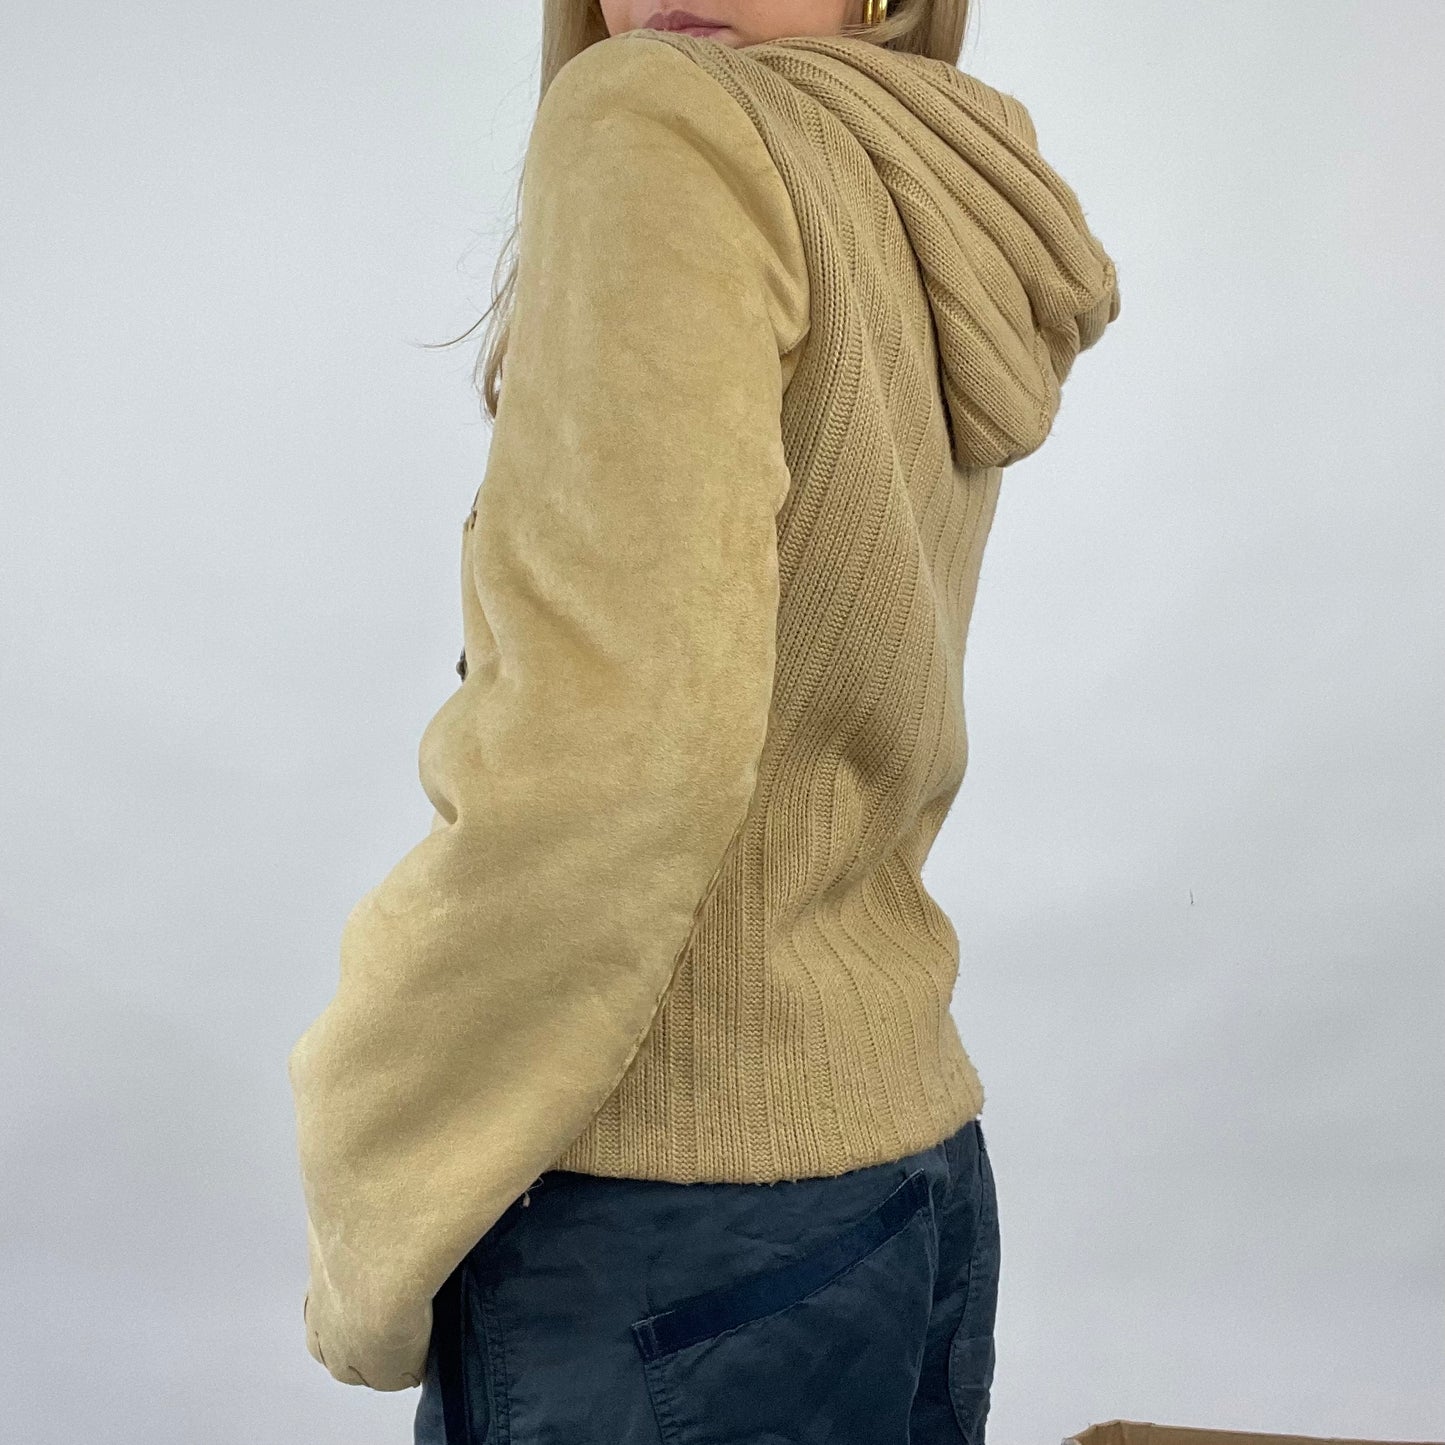 GIRL CORE DROP | medium beige suede jacket with fur trim detail